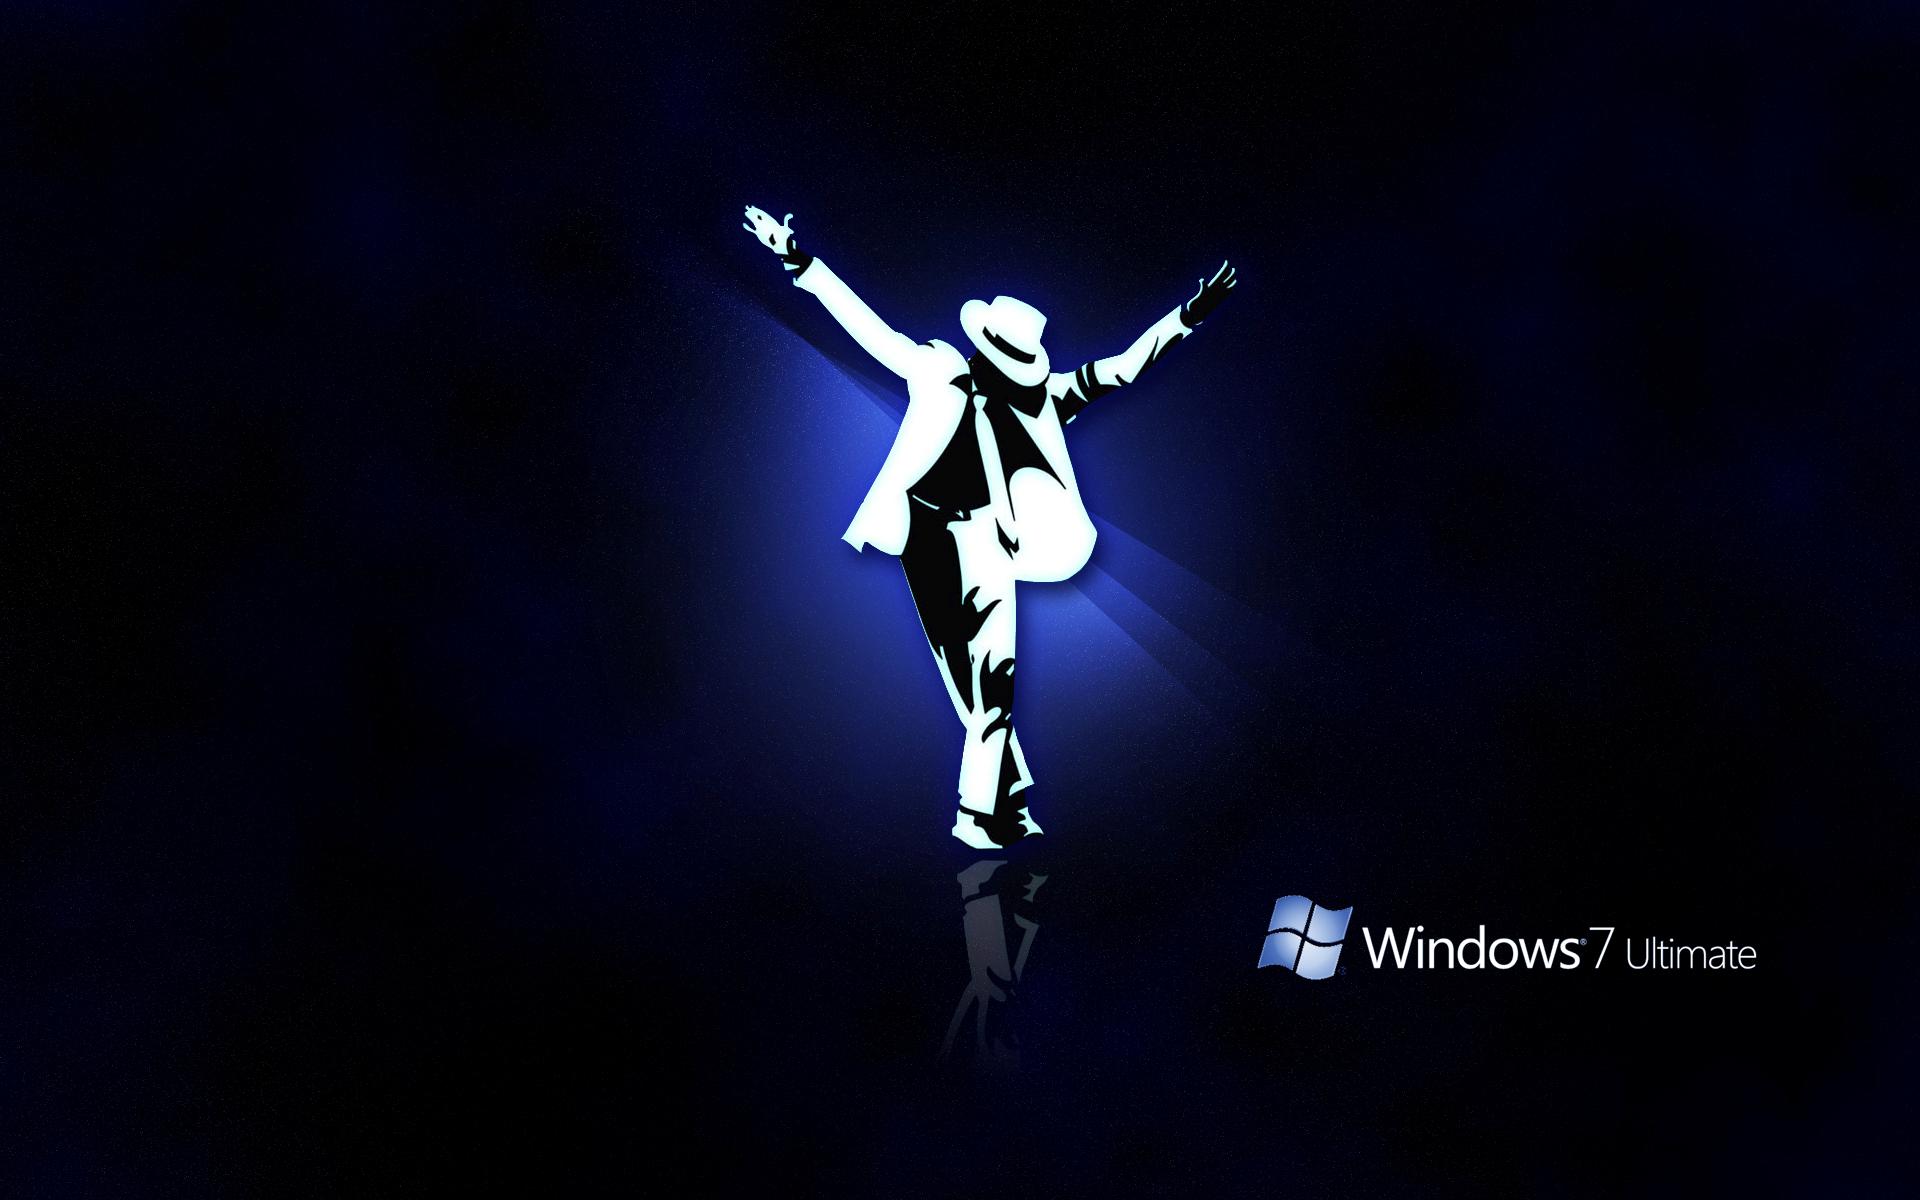 Michael Jackson Wallpaper and Theme for Windows 7